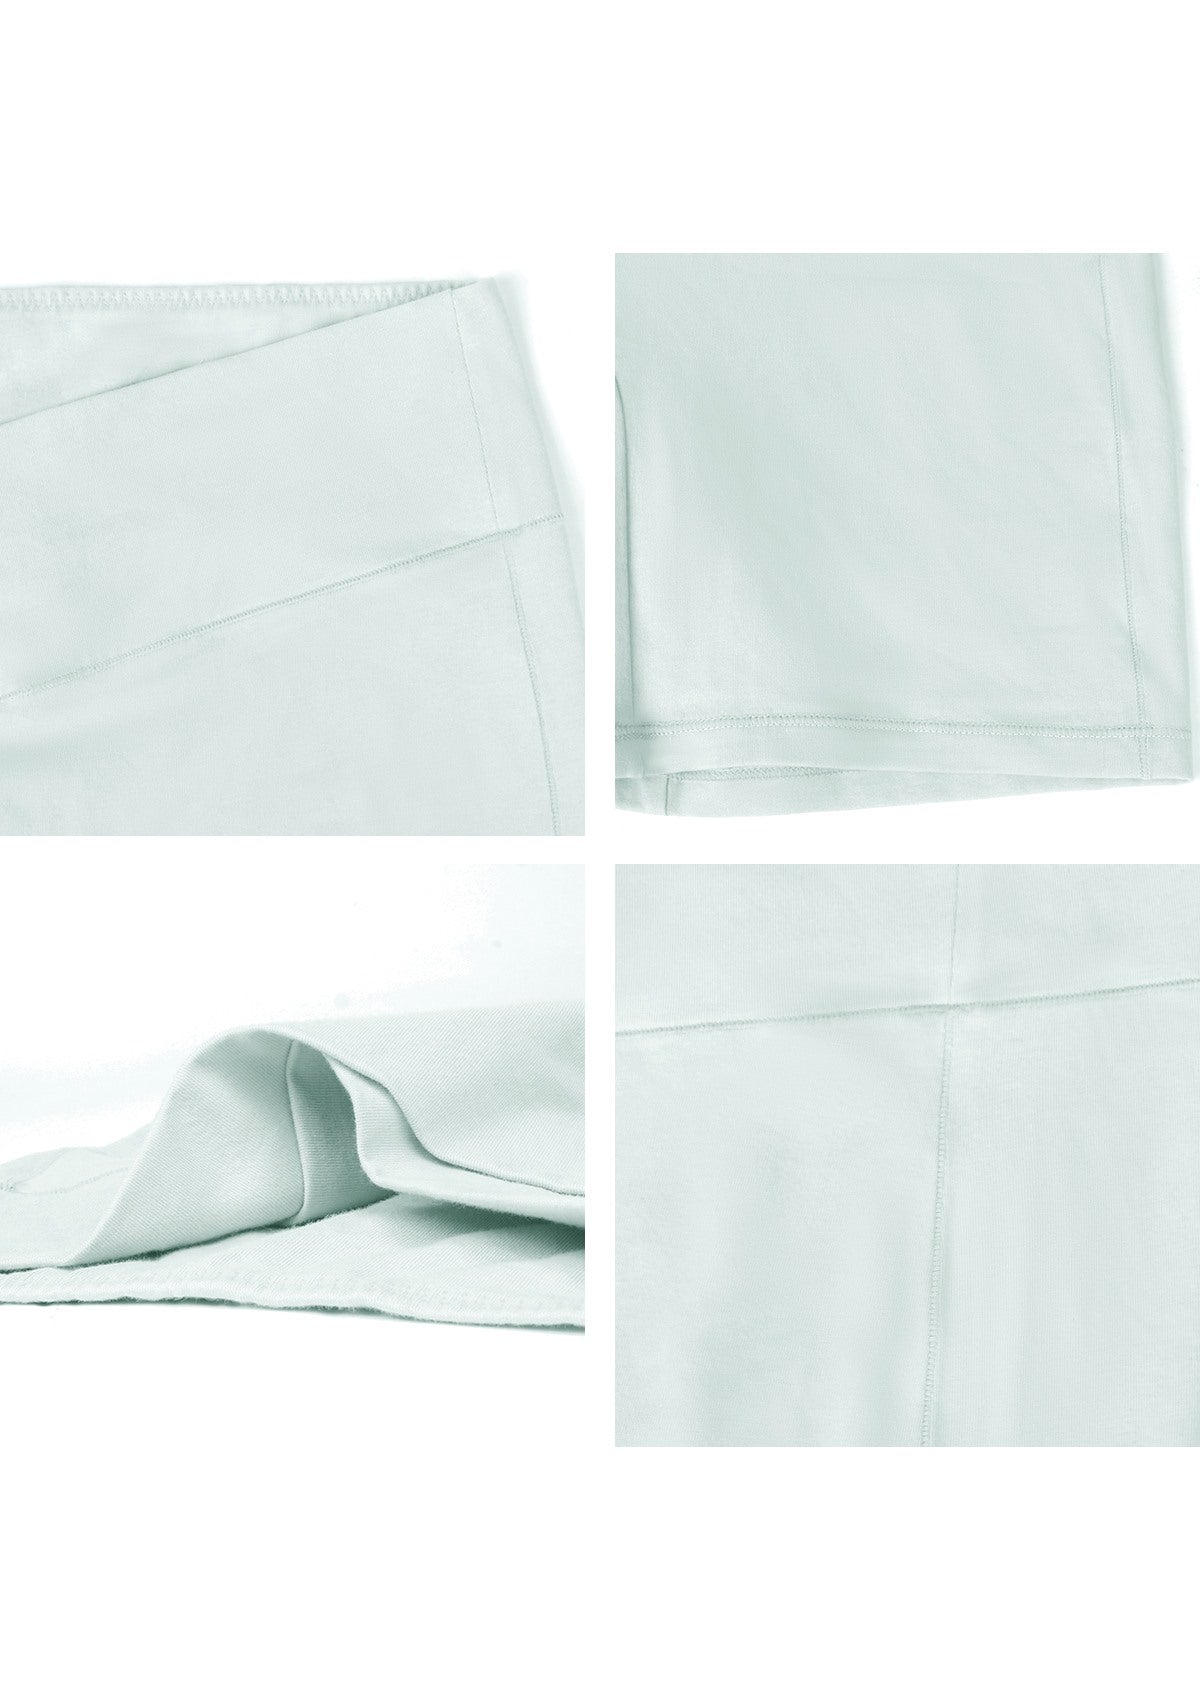 All-Day Comfort High-Rise Cotton Boyshorts Underwear 3 Pack - S / Black+Beige+Green